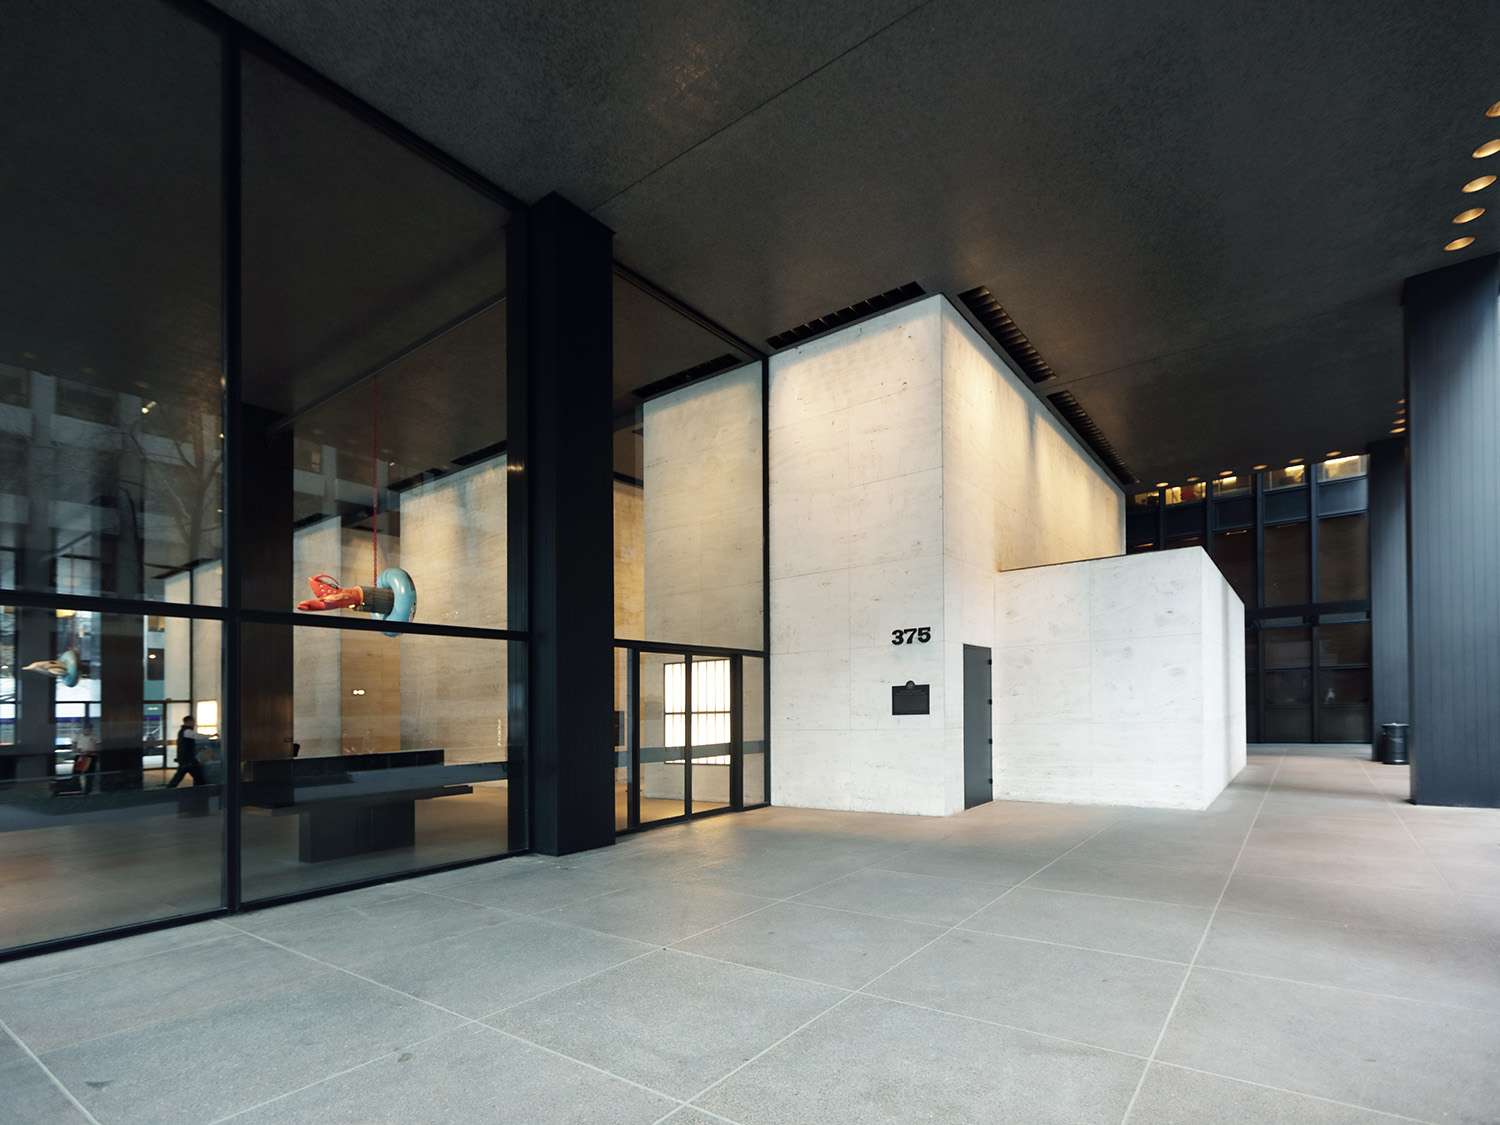 Seagram building
Mies van der Rohe, 1956
New York